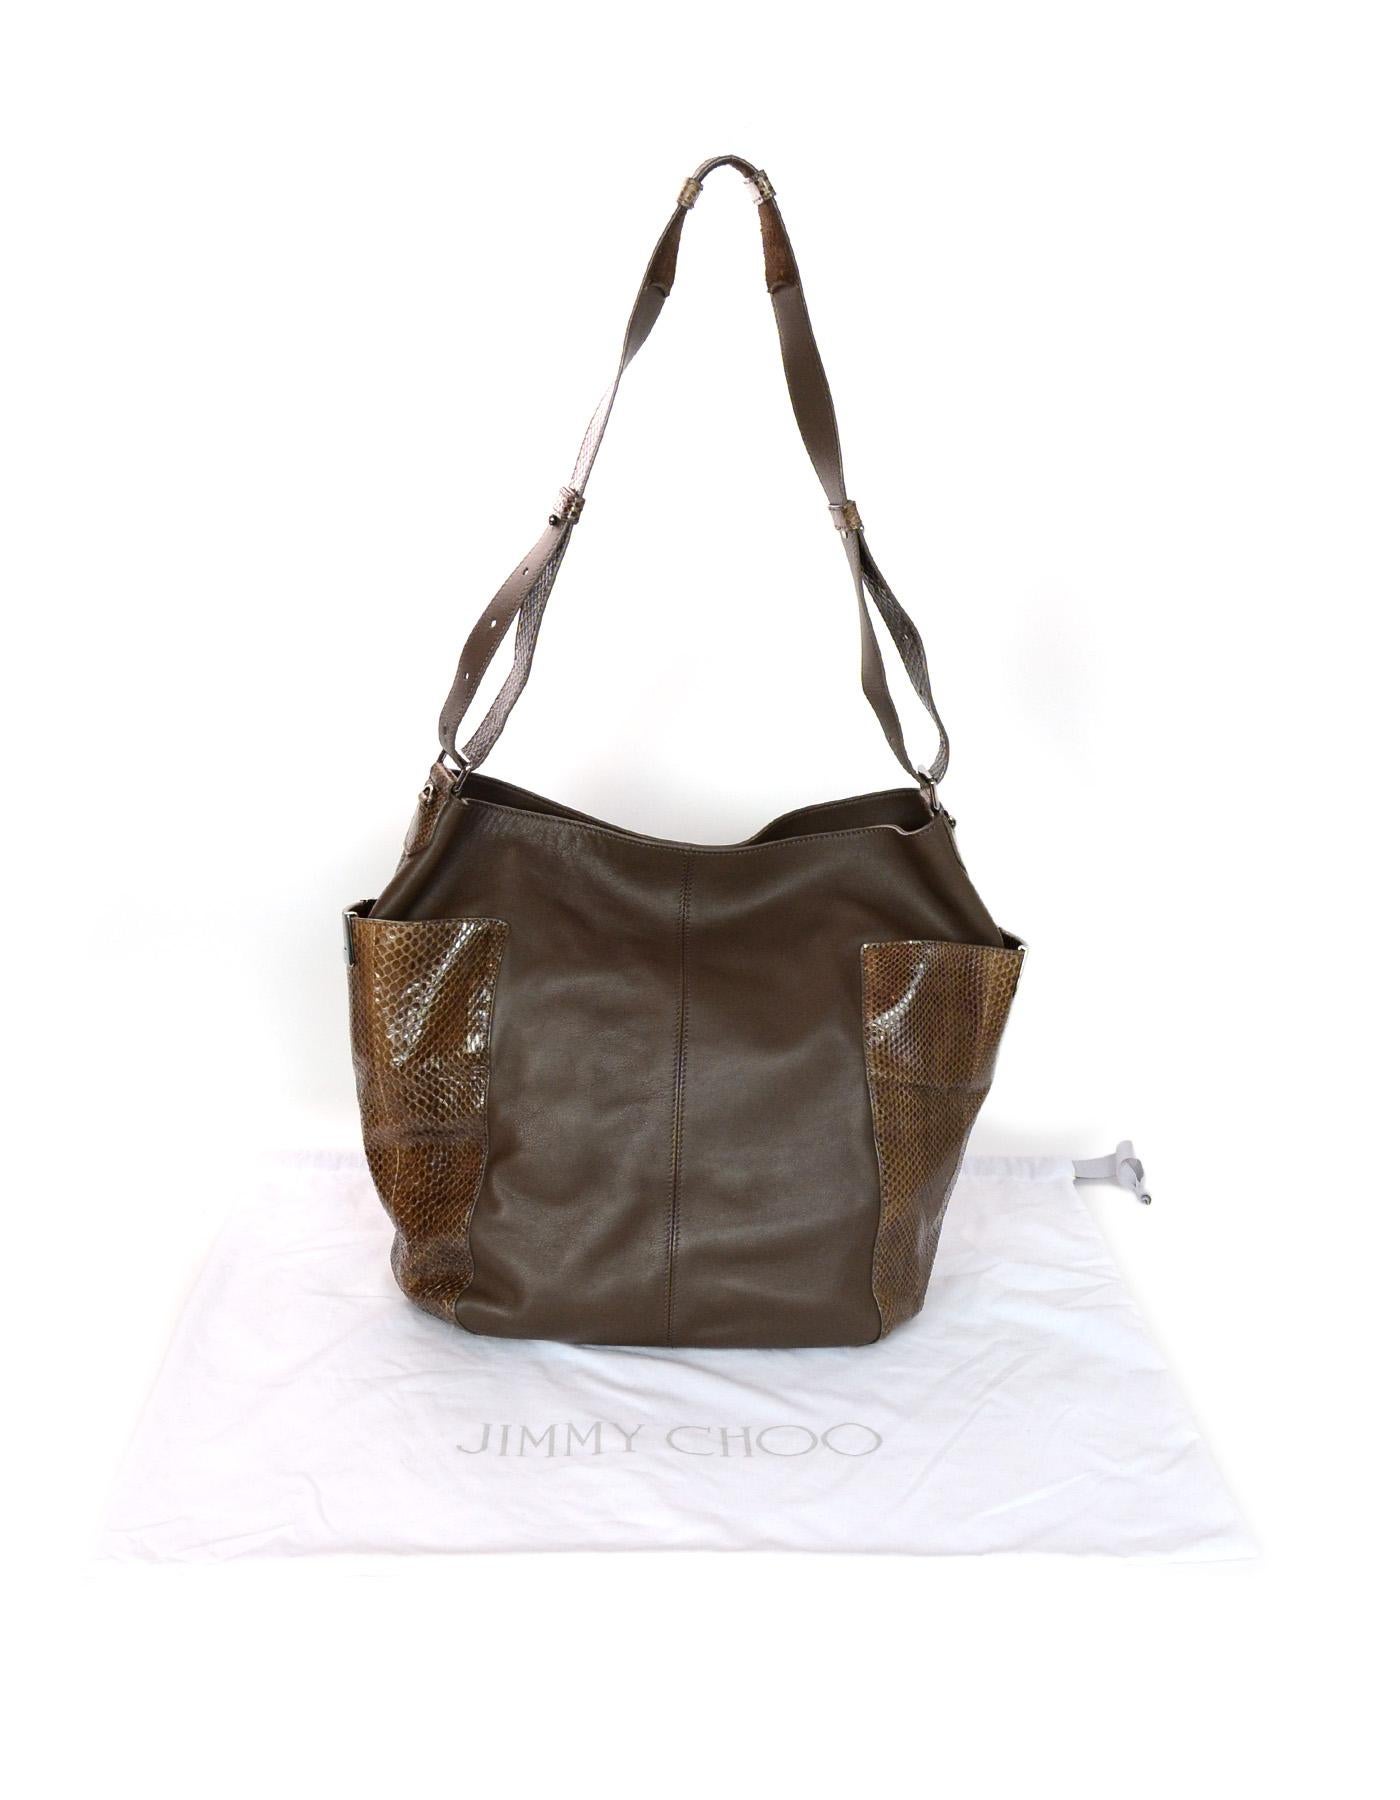 Jimmy Choo Brown Leather & Snakeskin Anna Hobo Bag w/ Side Pockets  3